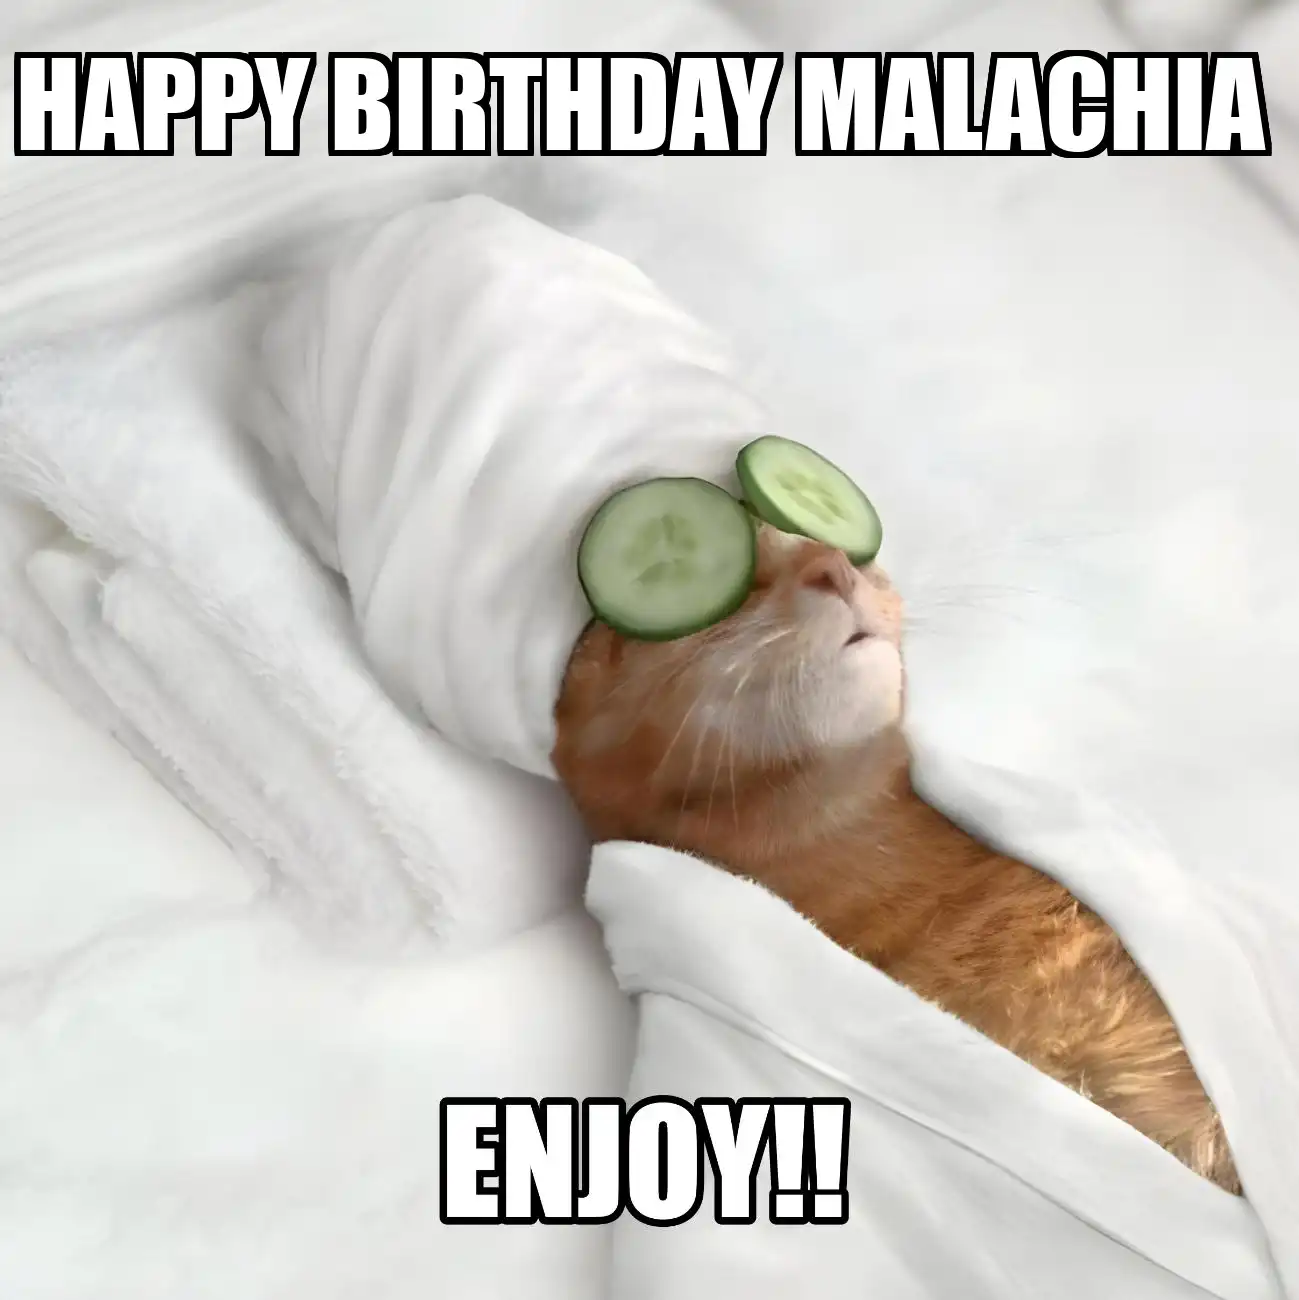 Happy Birthday Malachia Enjoy Cat Meme